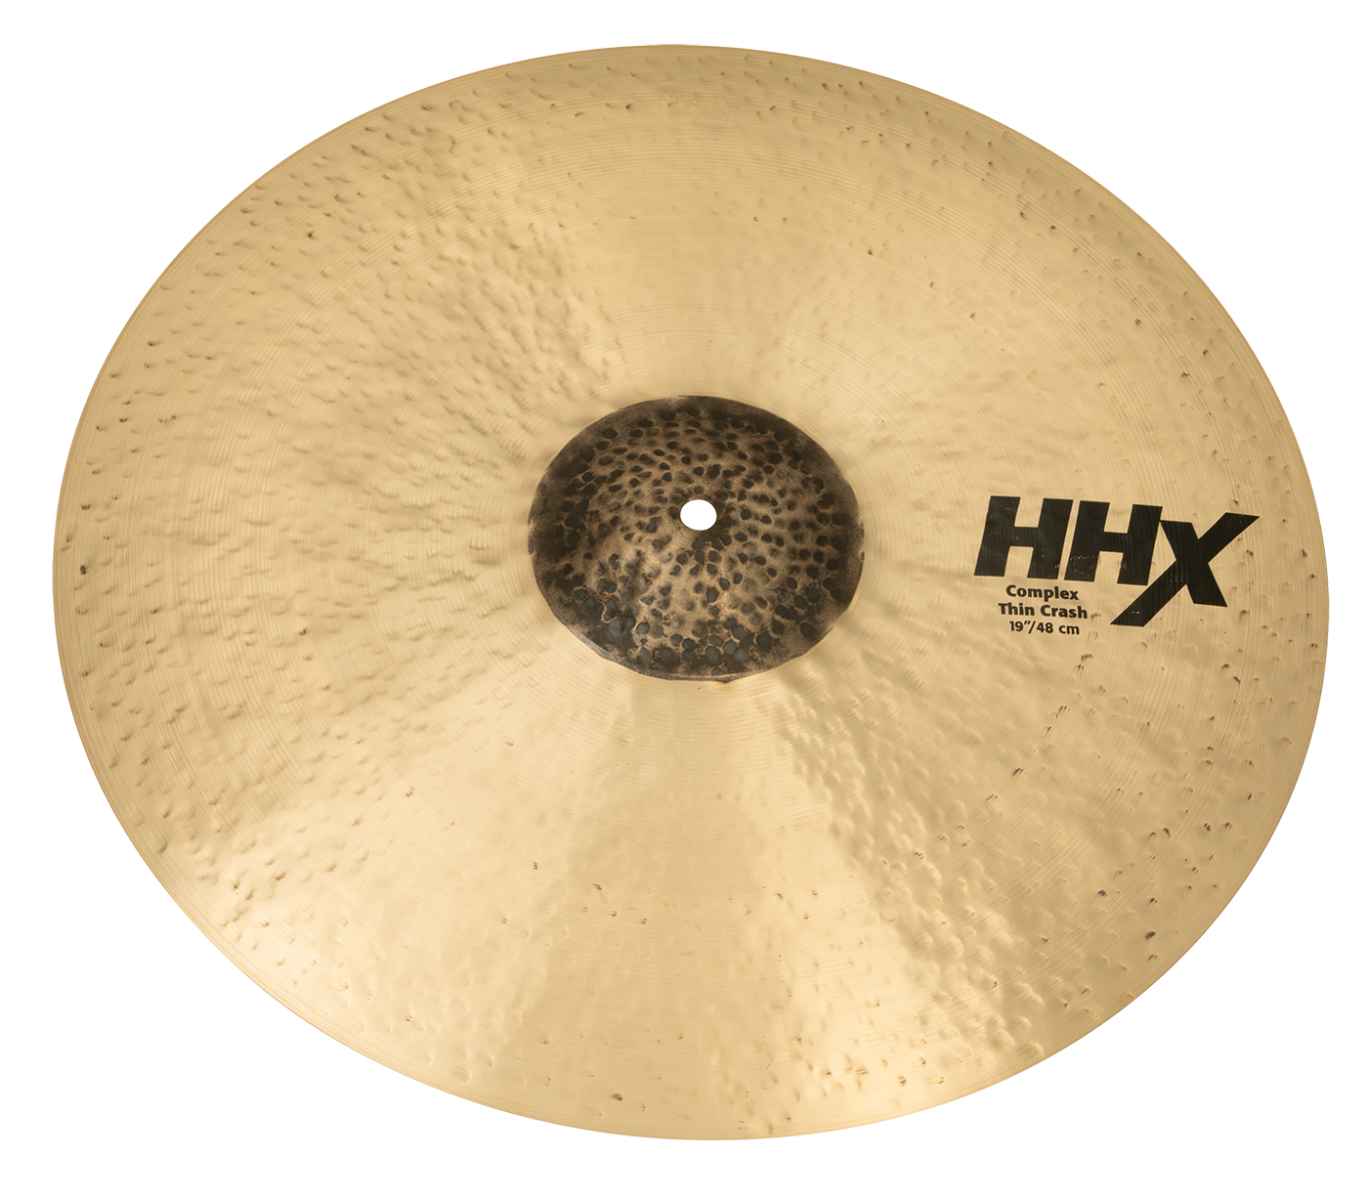 19” HHX Complex Thin Crash